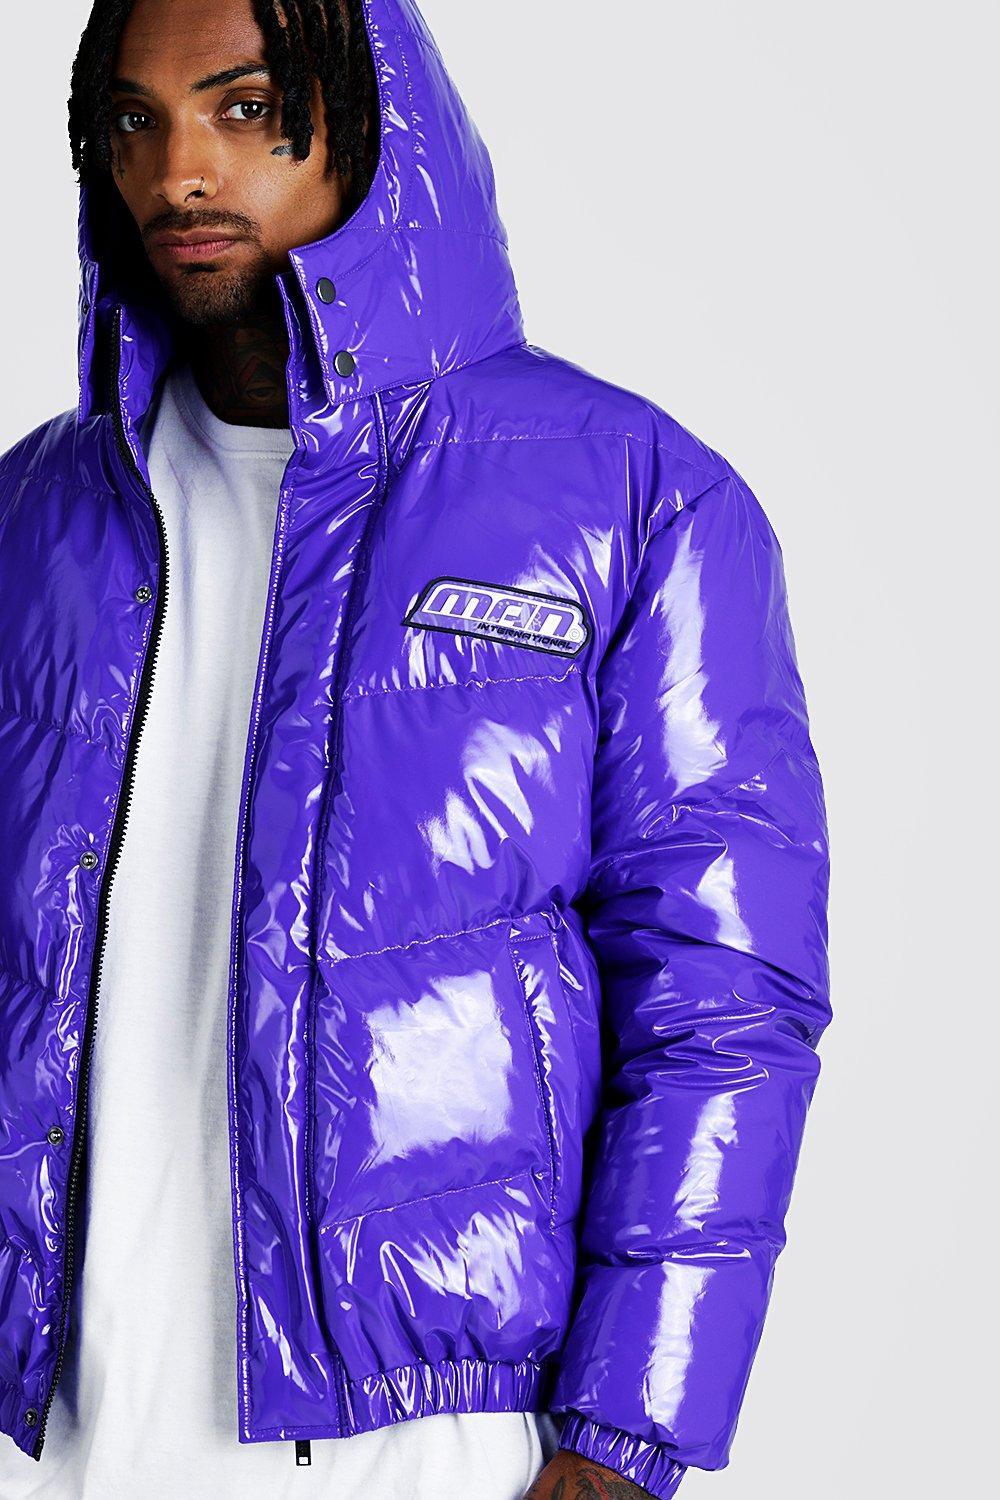 BoohooMAN Denim Man High Shine Puffer Coat in Purple for Men - Lyst